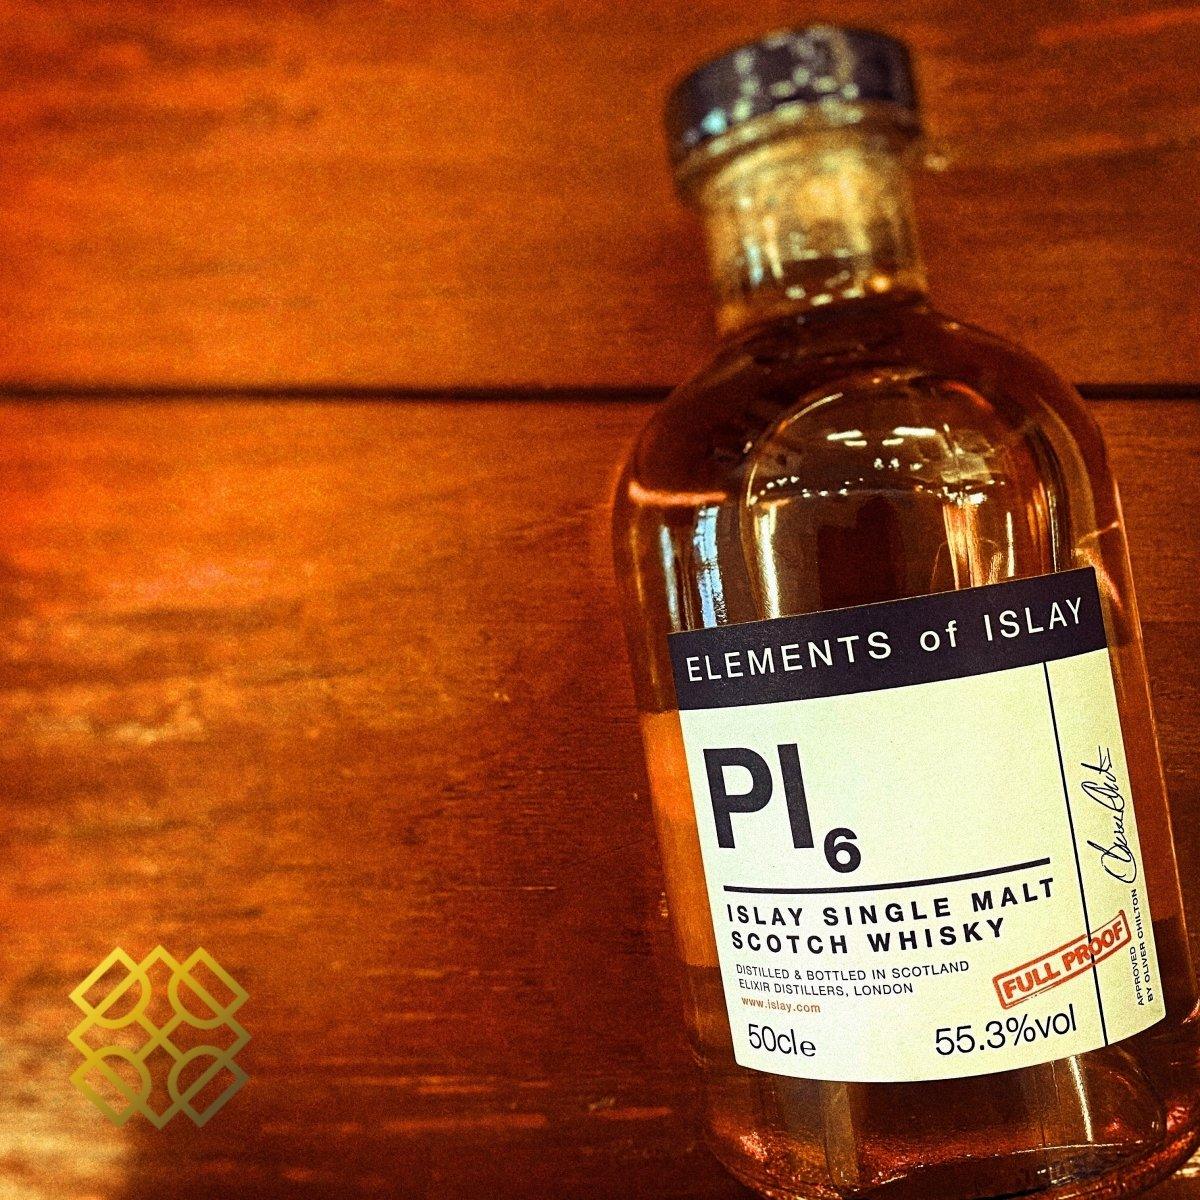 Elements of Islay Port Charlotte - 7YO, 2011/2019, PI6, 55.3%  Type : Single malt whisky